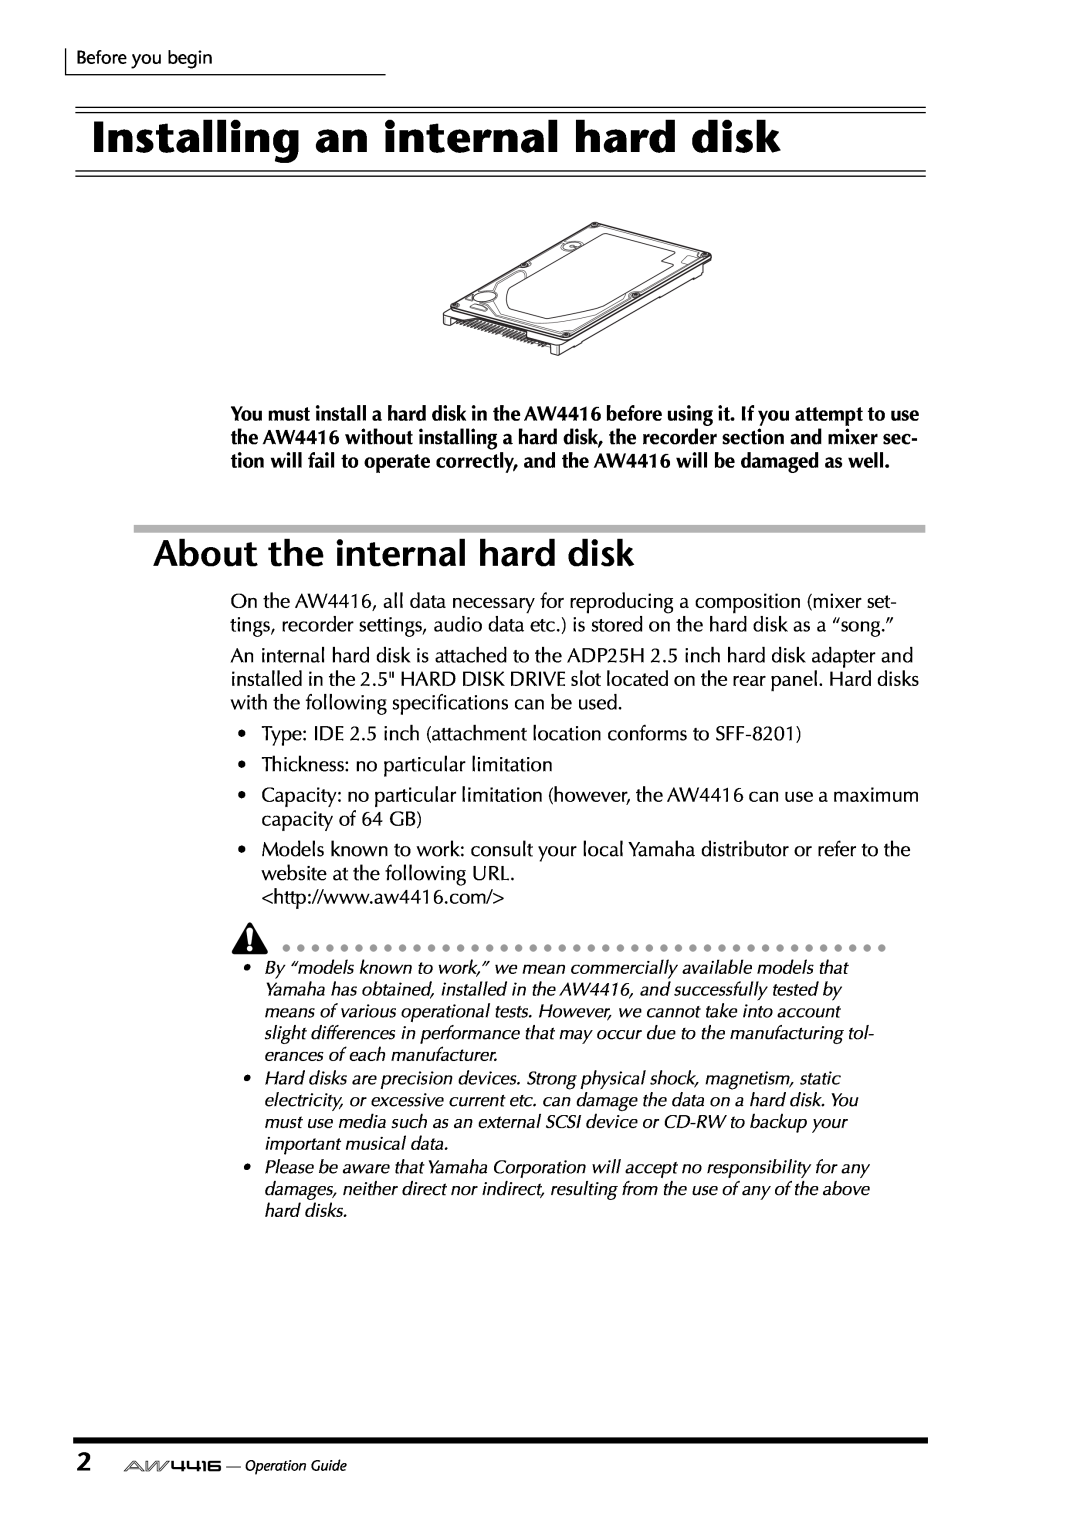 Yamaha AW4416 manual Installing an internal hard disk, About the internal hard disk 